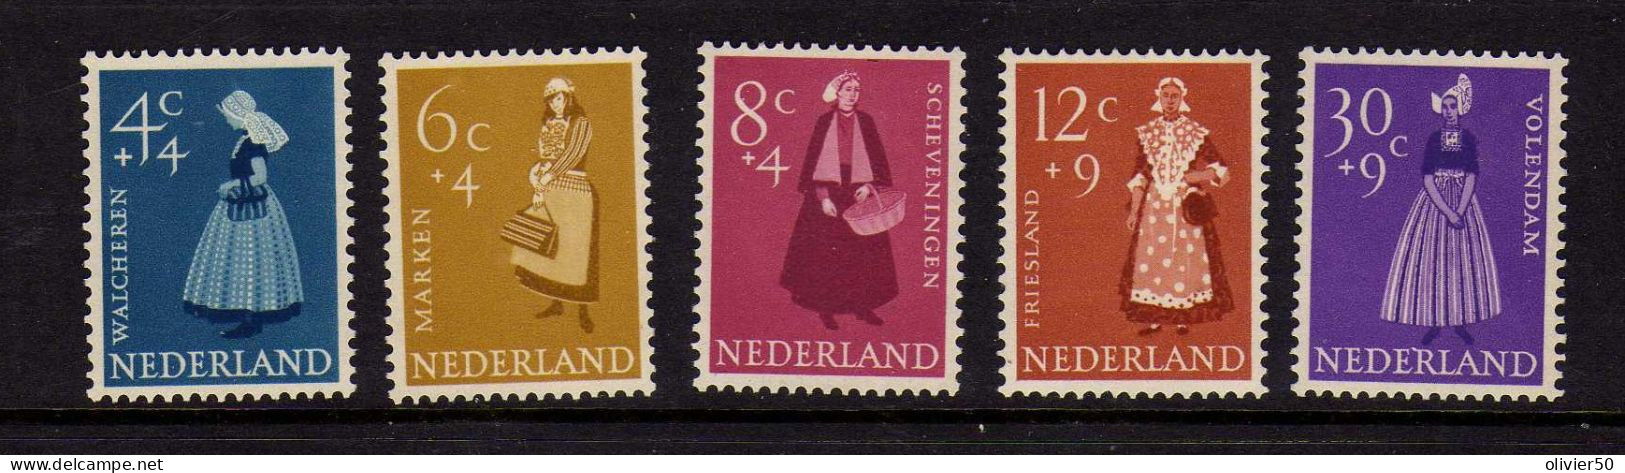 Pays-Bas - 1958 - Costumes - Oeuvres De Bienfaisance - Neufs** - MNH - Ungebraucht